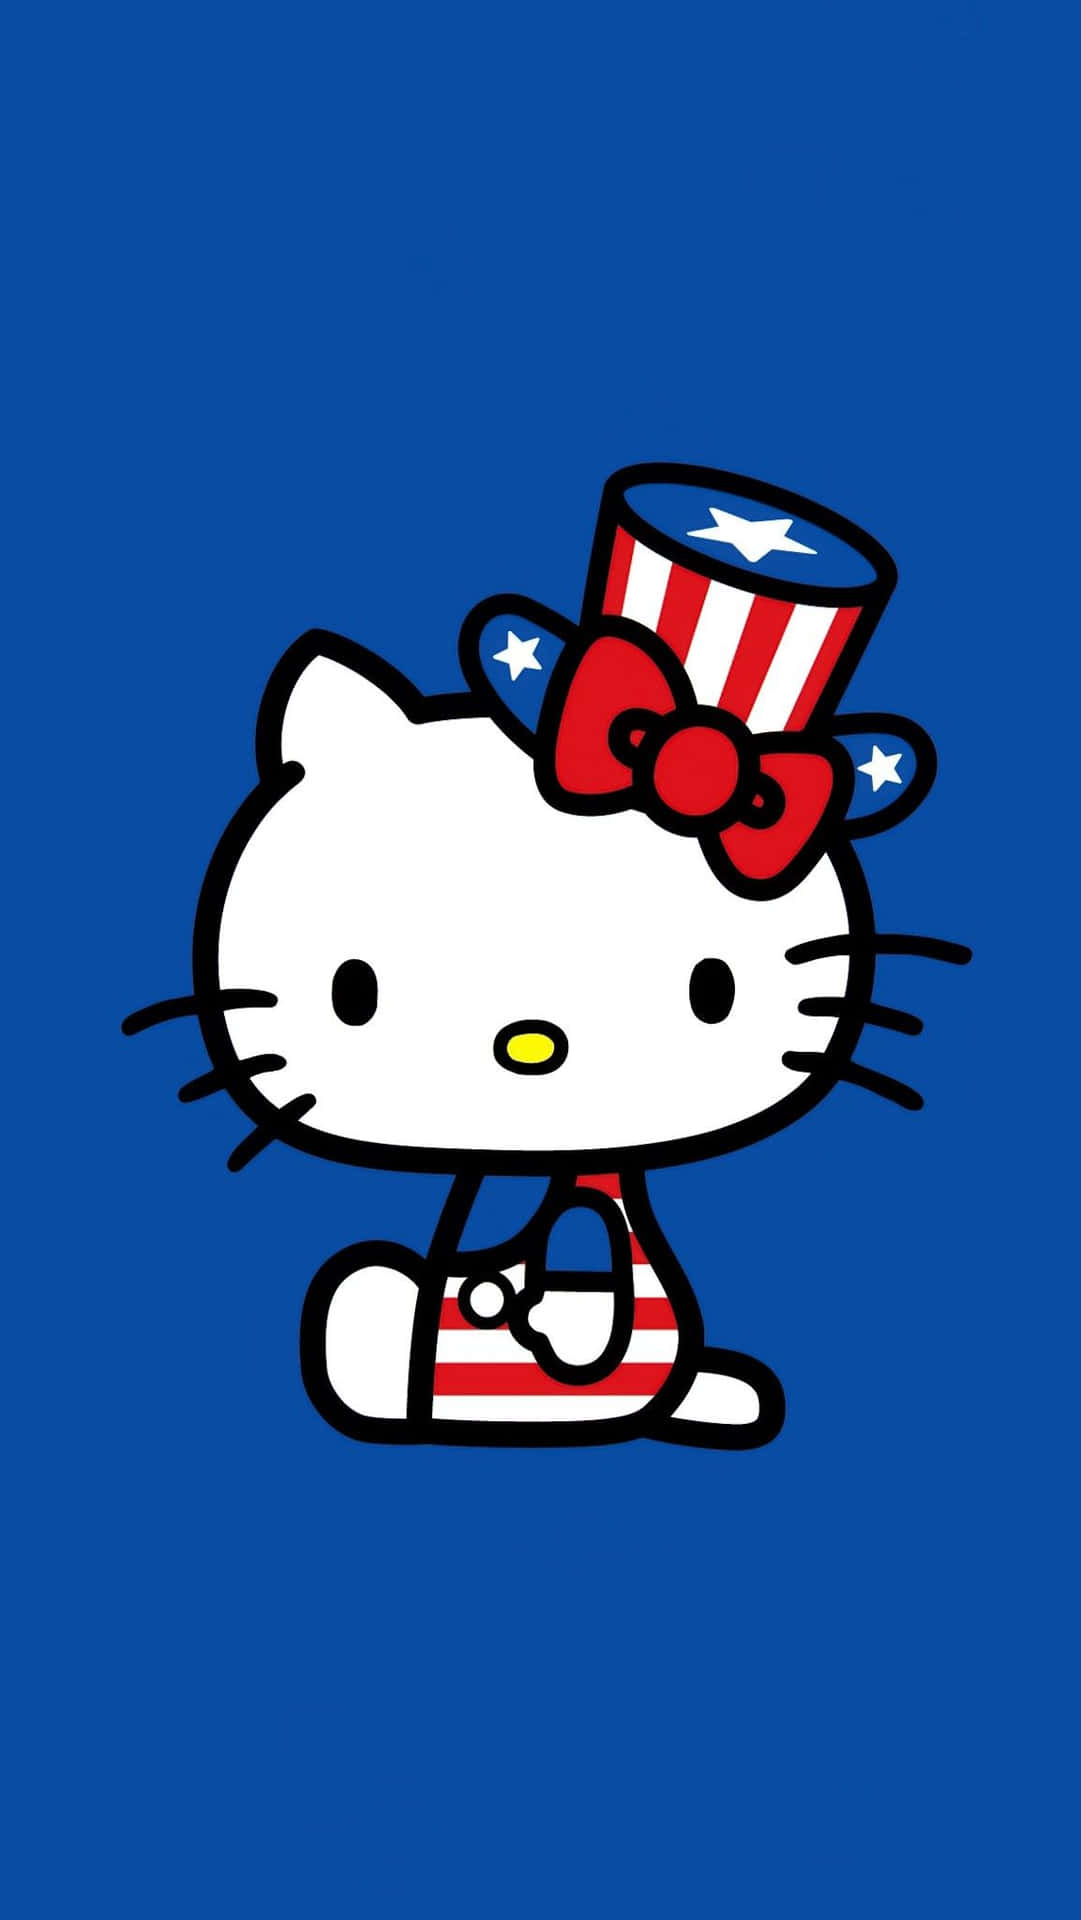 Patriotic Hello Kitty Celebration Wallpaper